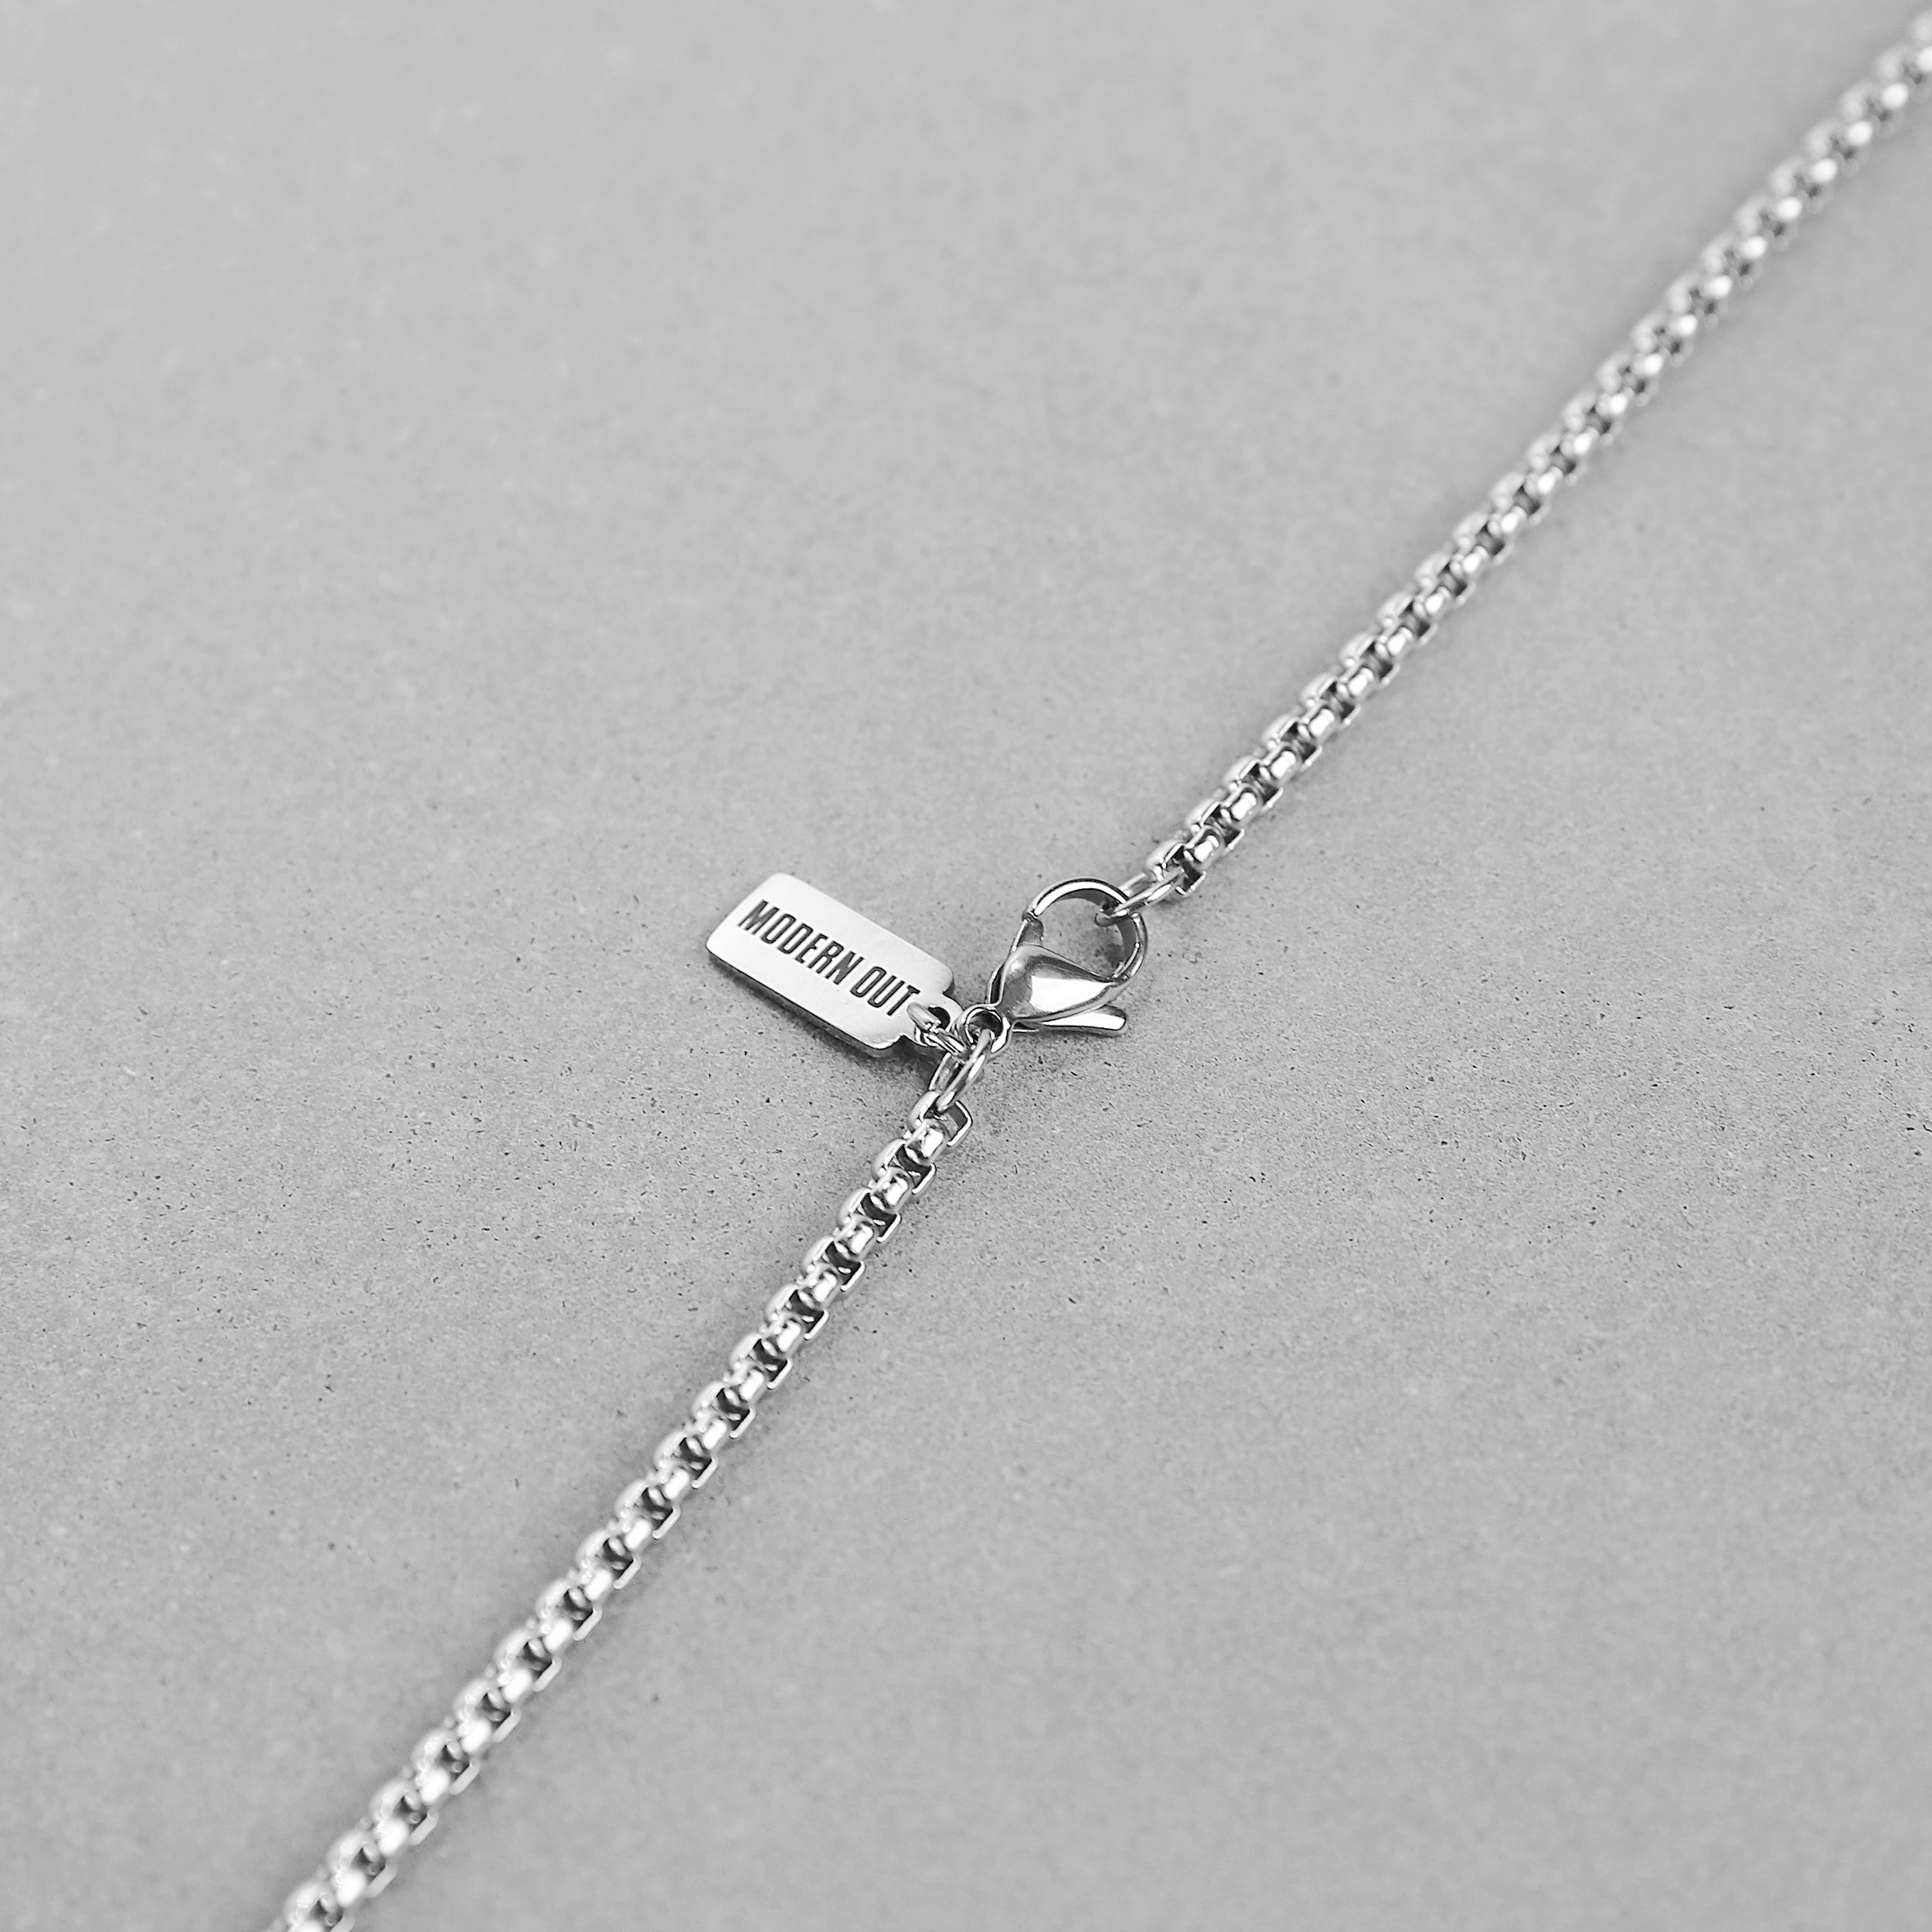 Rugged Arrowhead Necklace - Silver